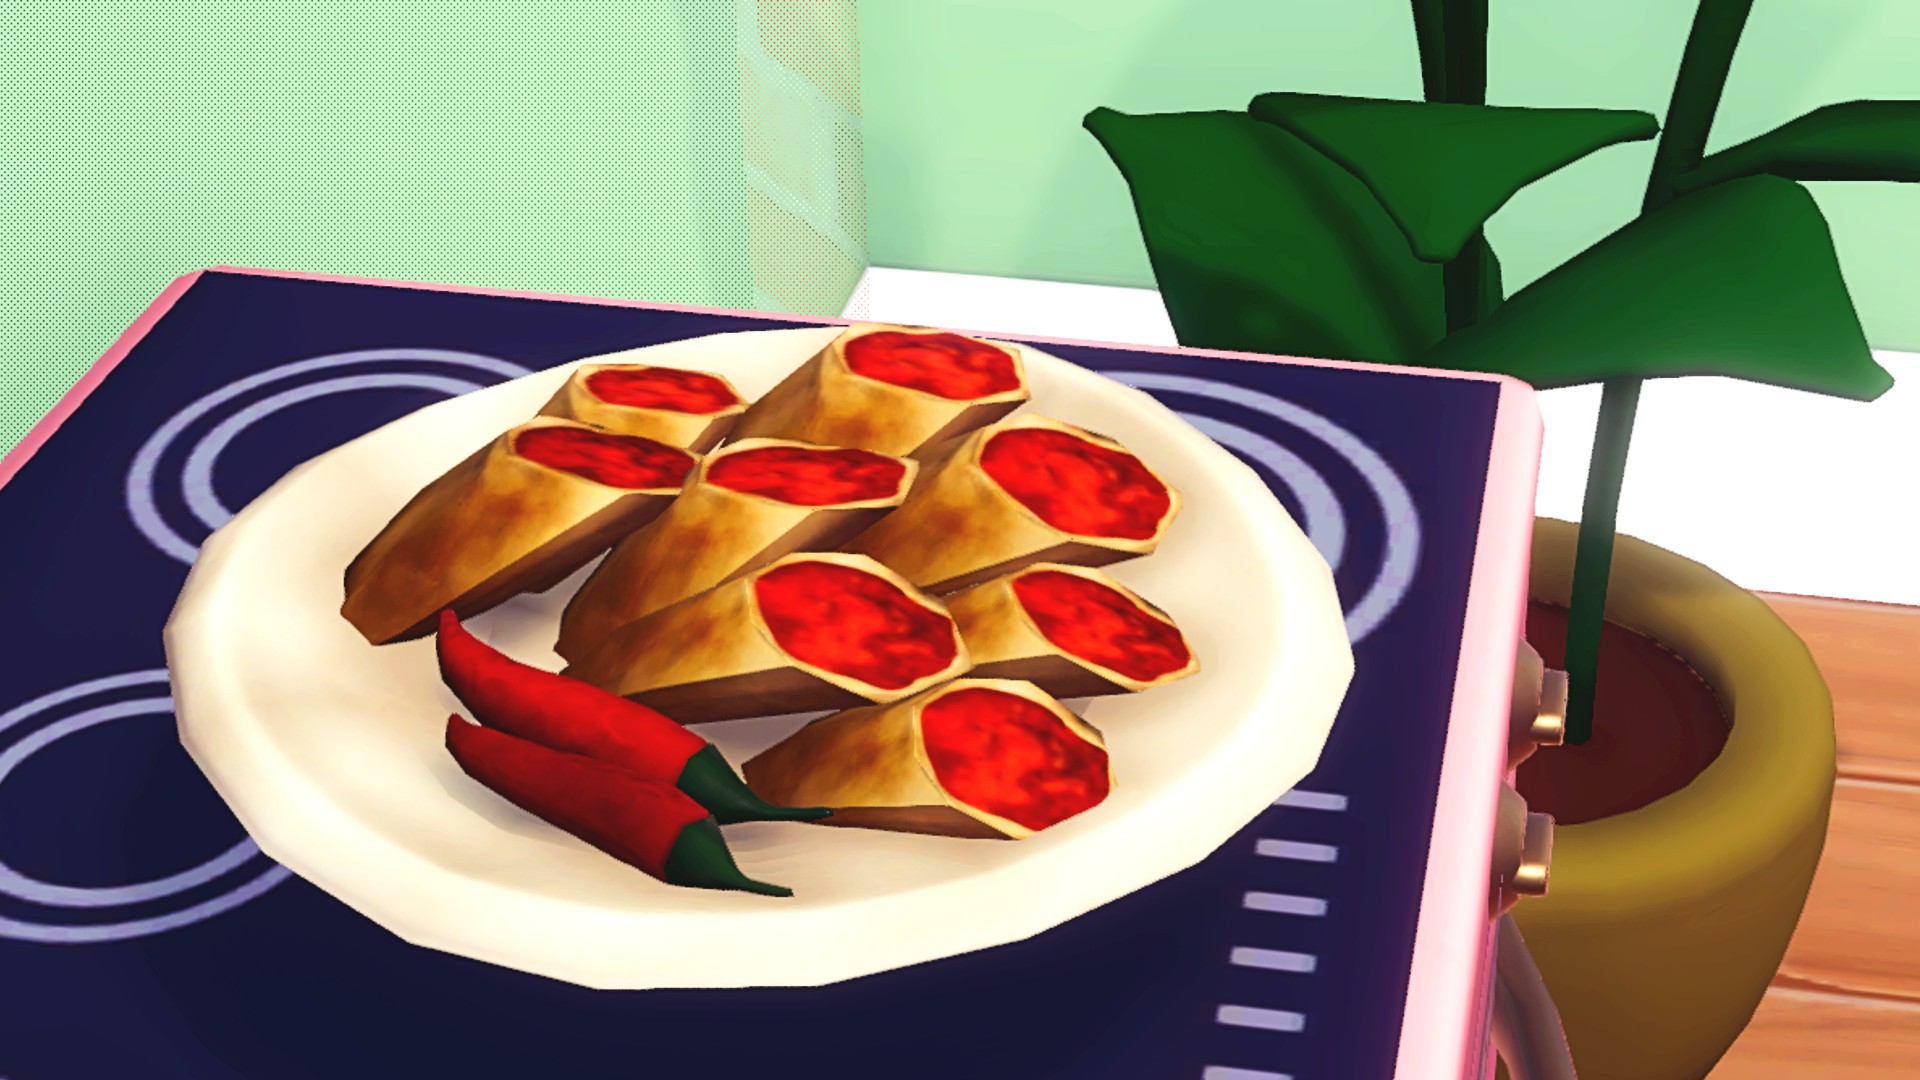 Disney Dreamlight Valley three star recipes: Kappa Maki, four pieces of kappa maki sushi sit on a wooden sushi platter.